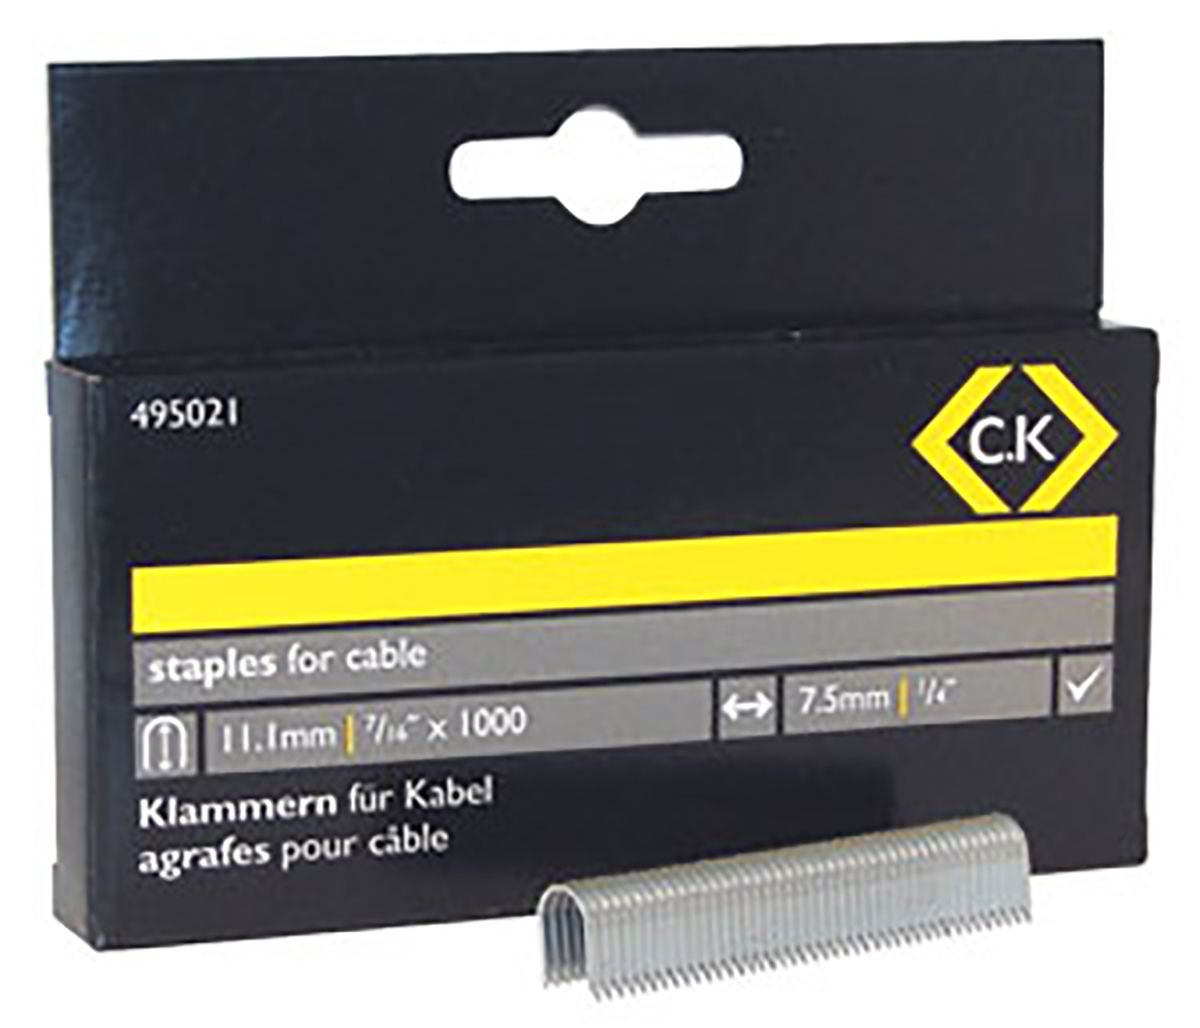 CK 7,5 x 10mm Staples